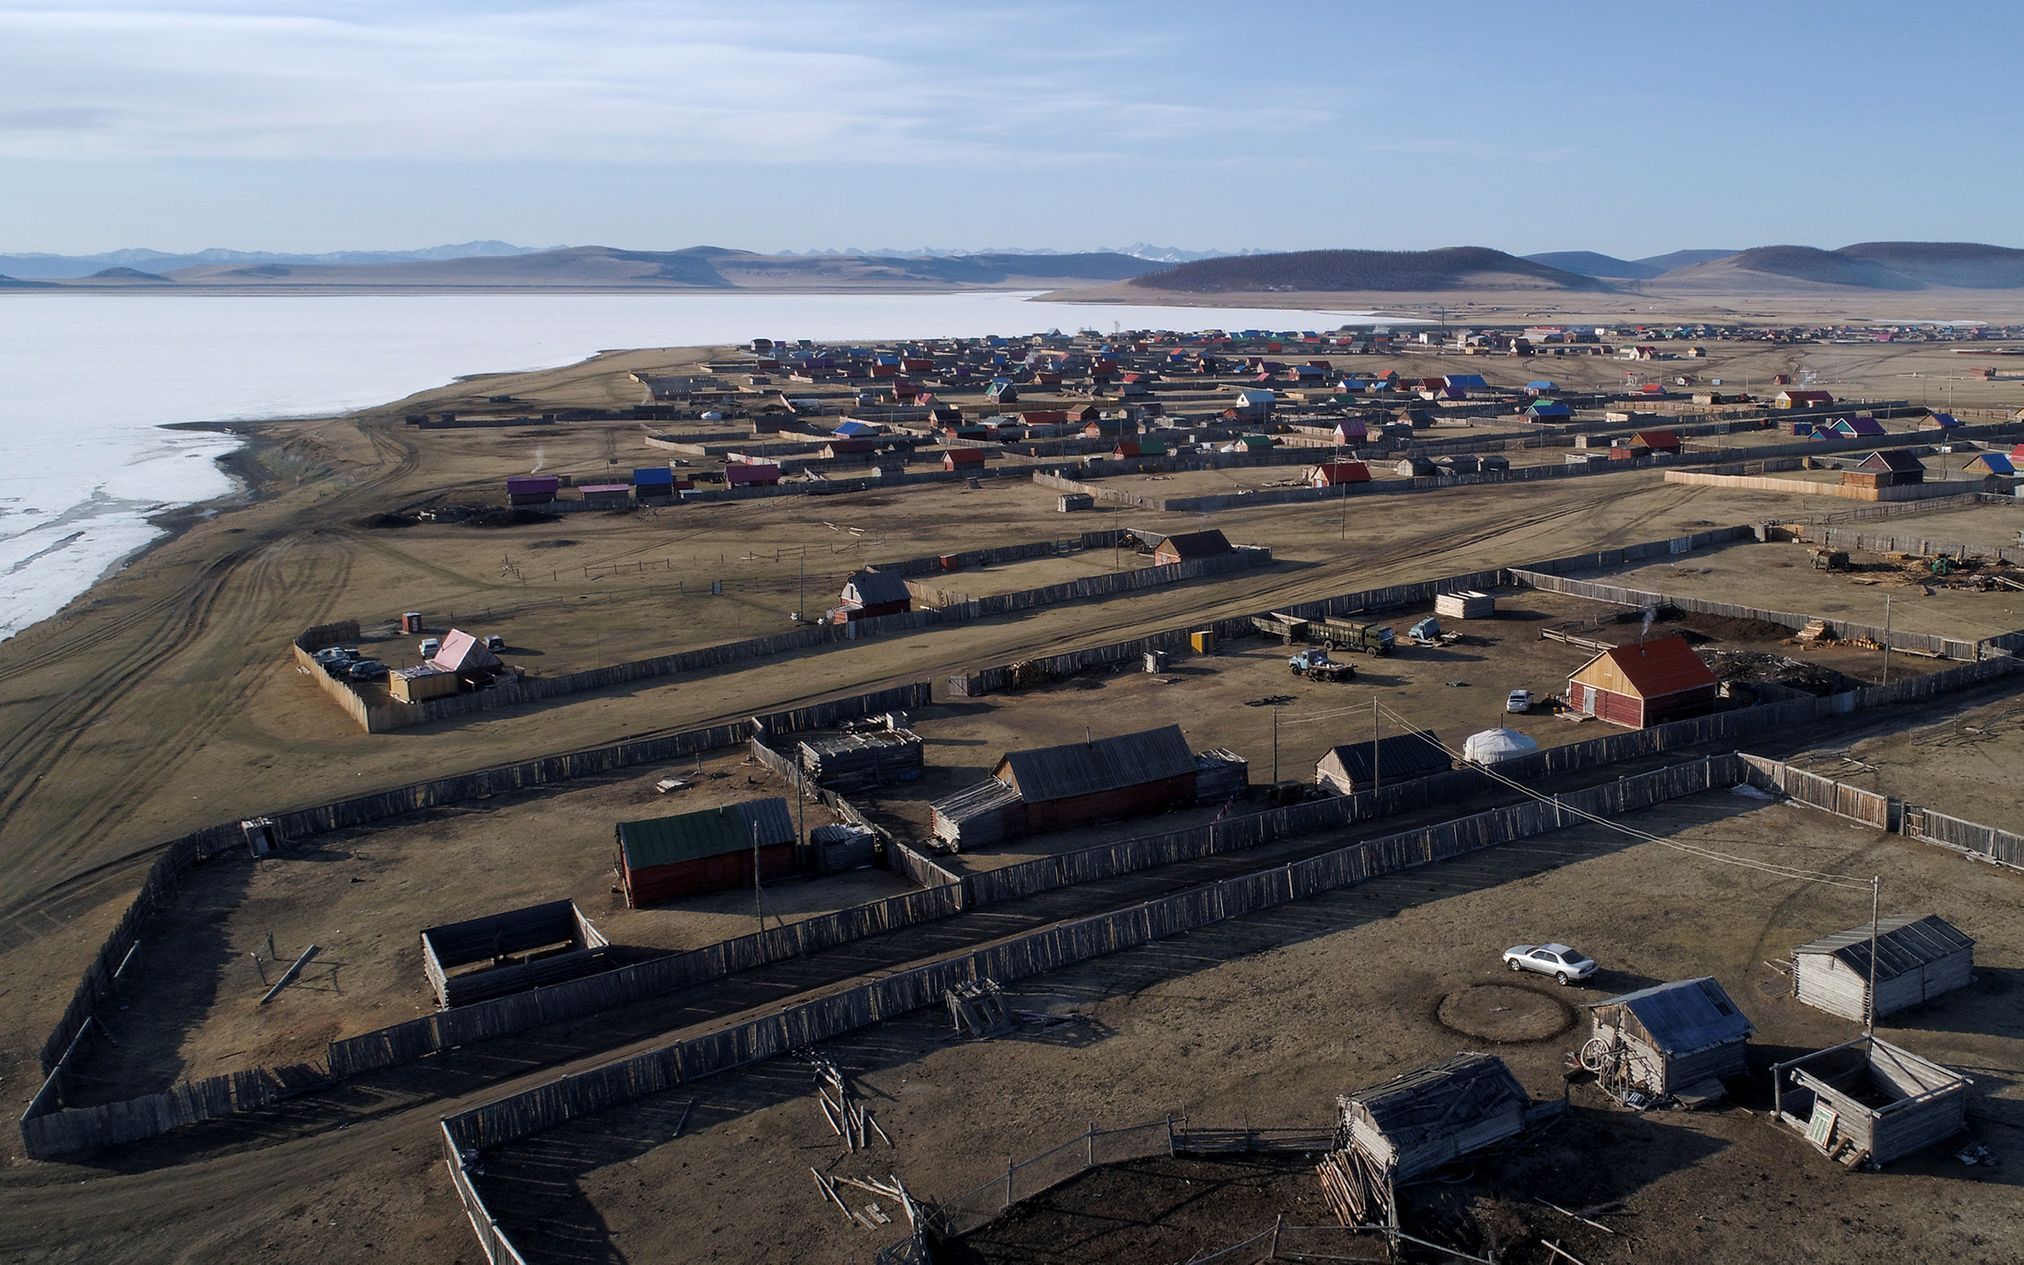 FOTOGALERIE / Život kočovných pastýřů v Mongolsku / Reuters / rok 2018 / 1